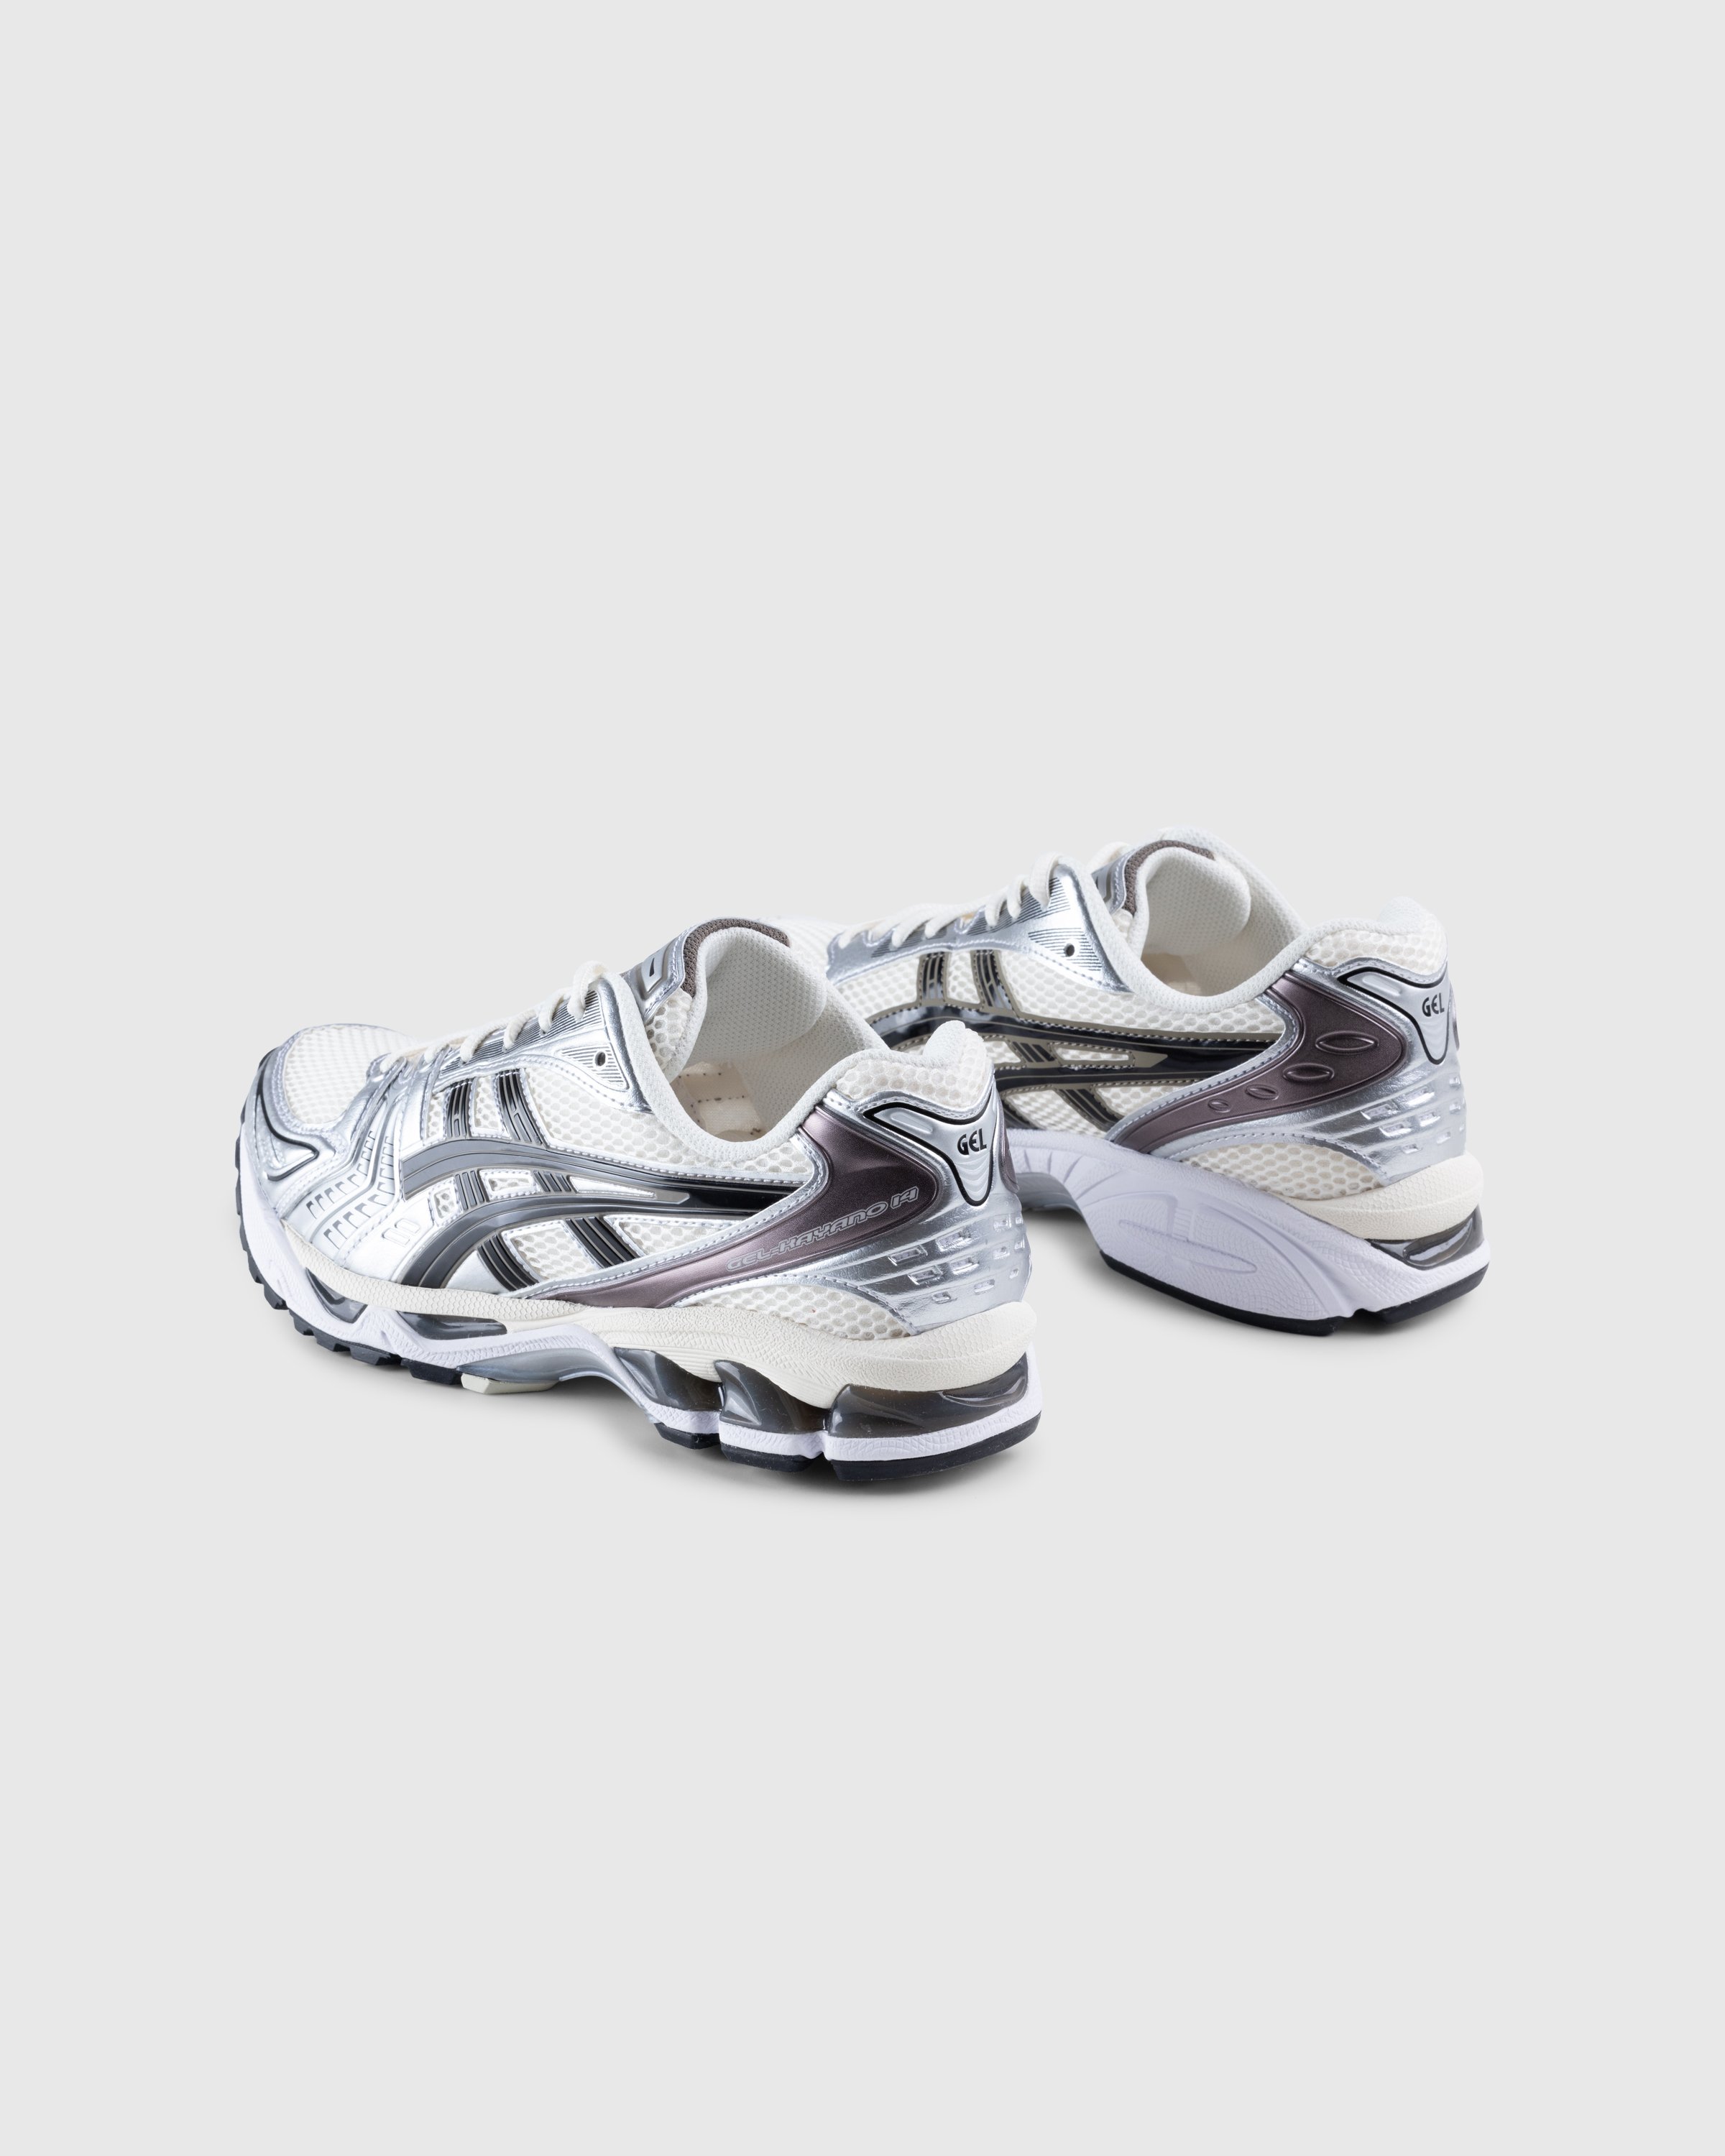 asics - GEL-KAYANO 14 Silver - Footwear - Silver - Image 4